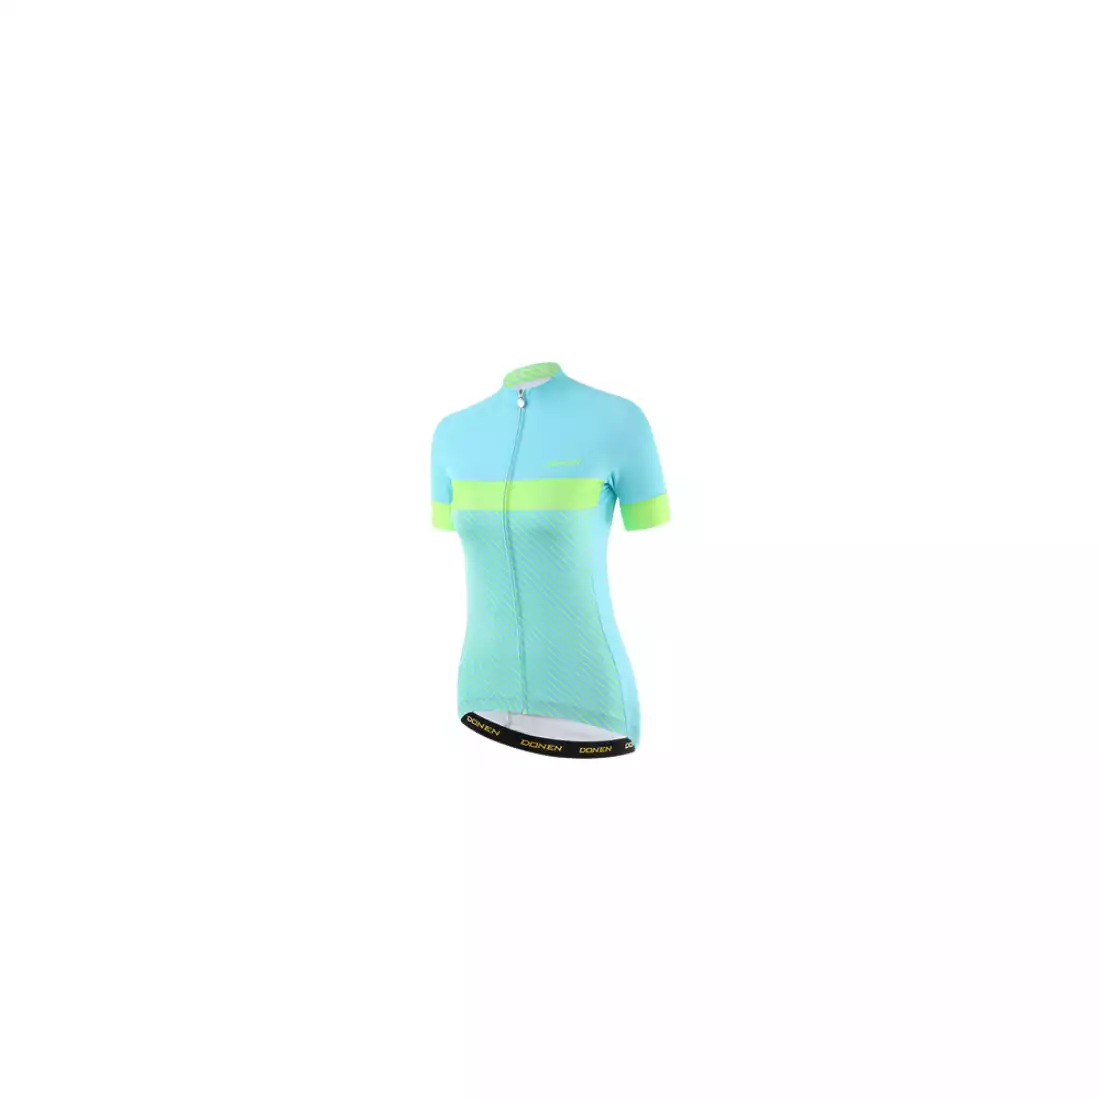 DONEN damska koszulka rowerowa turkusowo-zielona 